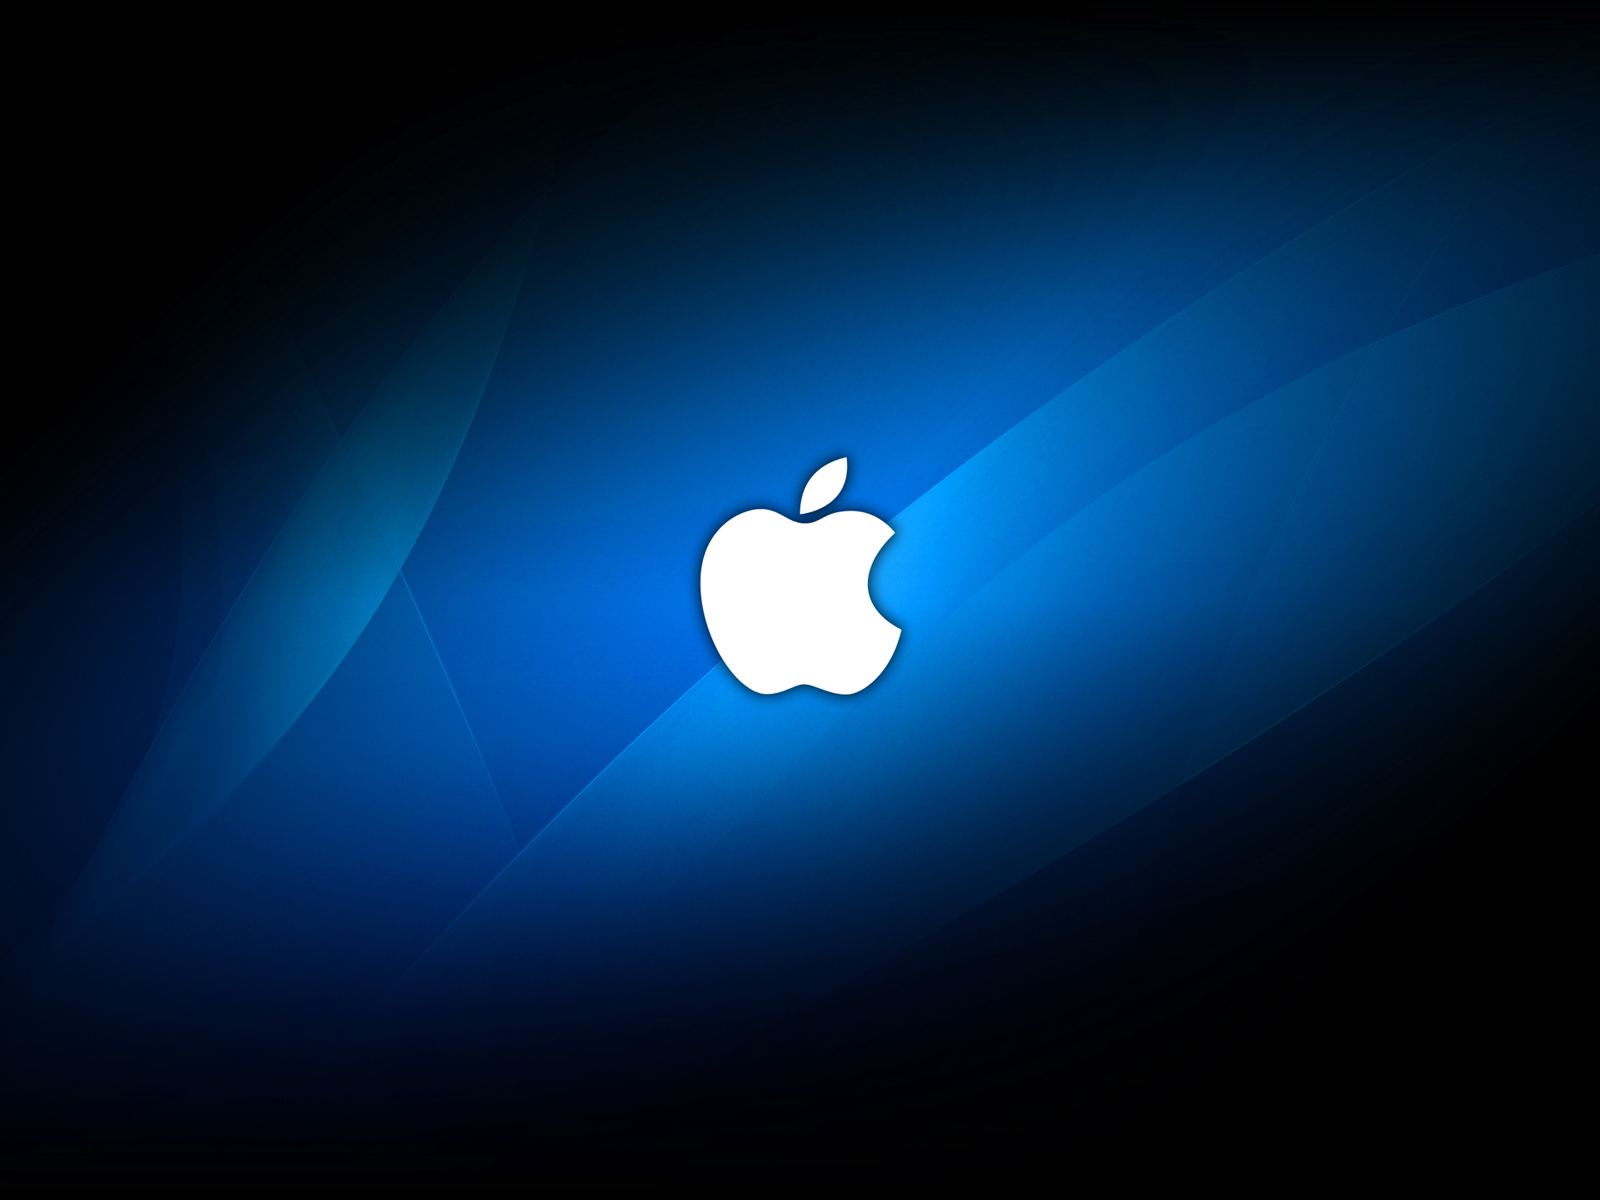 carta da parati logo iphone,blu,sistema operativo,cielo,atmosfera,tecnologia